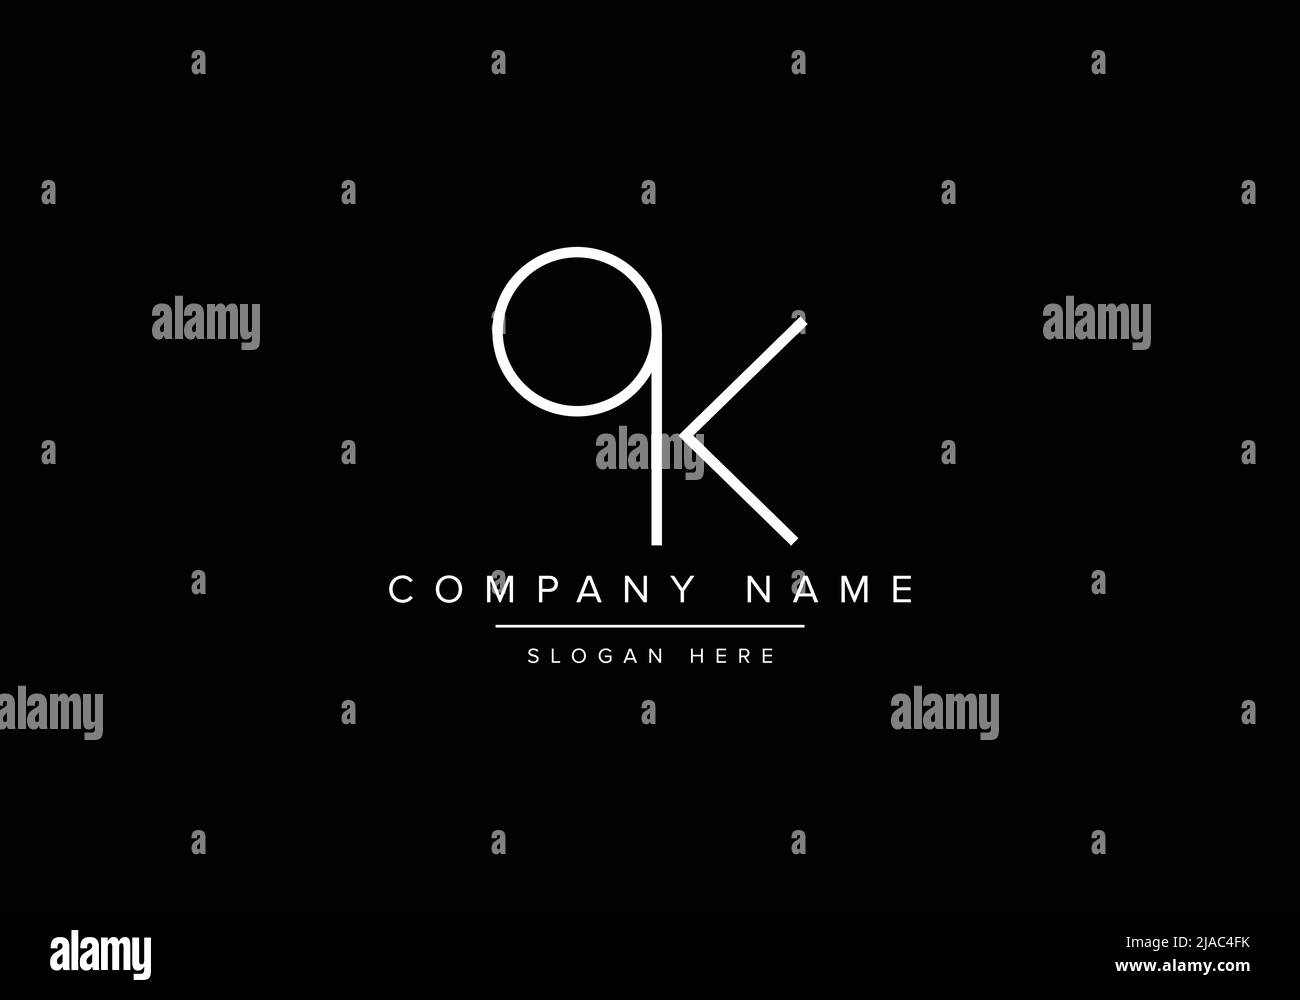 Creative minimal line art icon logo, QK monogram logo Stock Vector